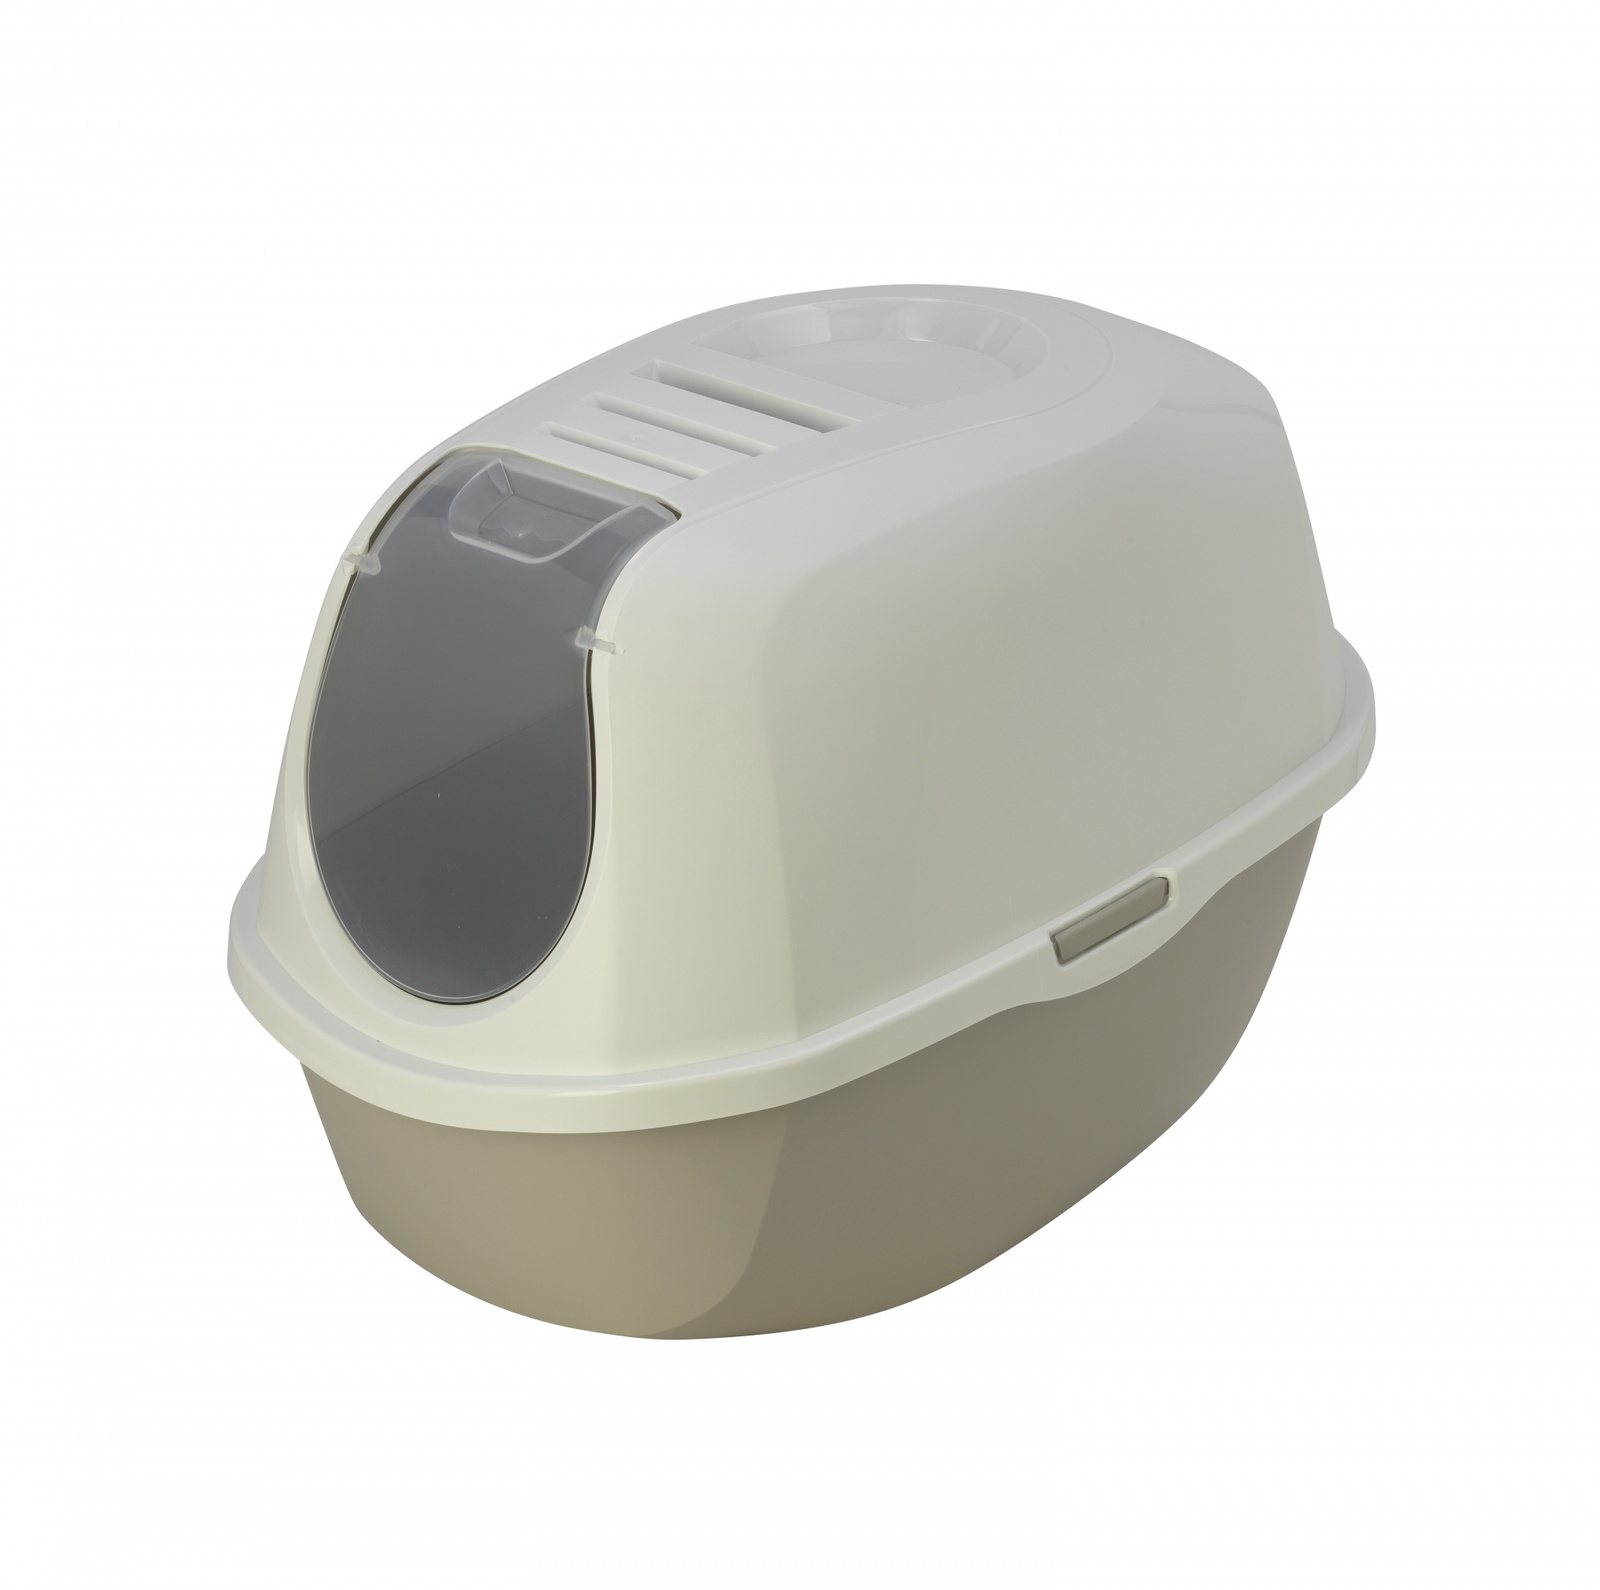 Moderna Moderna туалет-домик SmartCat с угольным фильтром, 54х40х41см, теплый серый (1,2 кг) moderna moderna туалет домик с угольным фильтром trendy cat райский сад 1